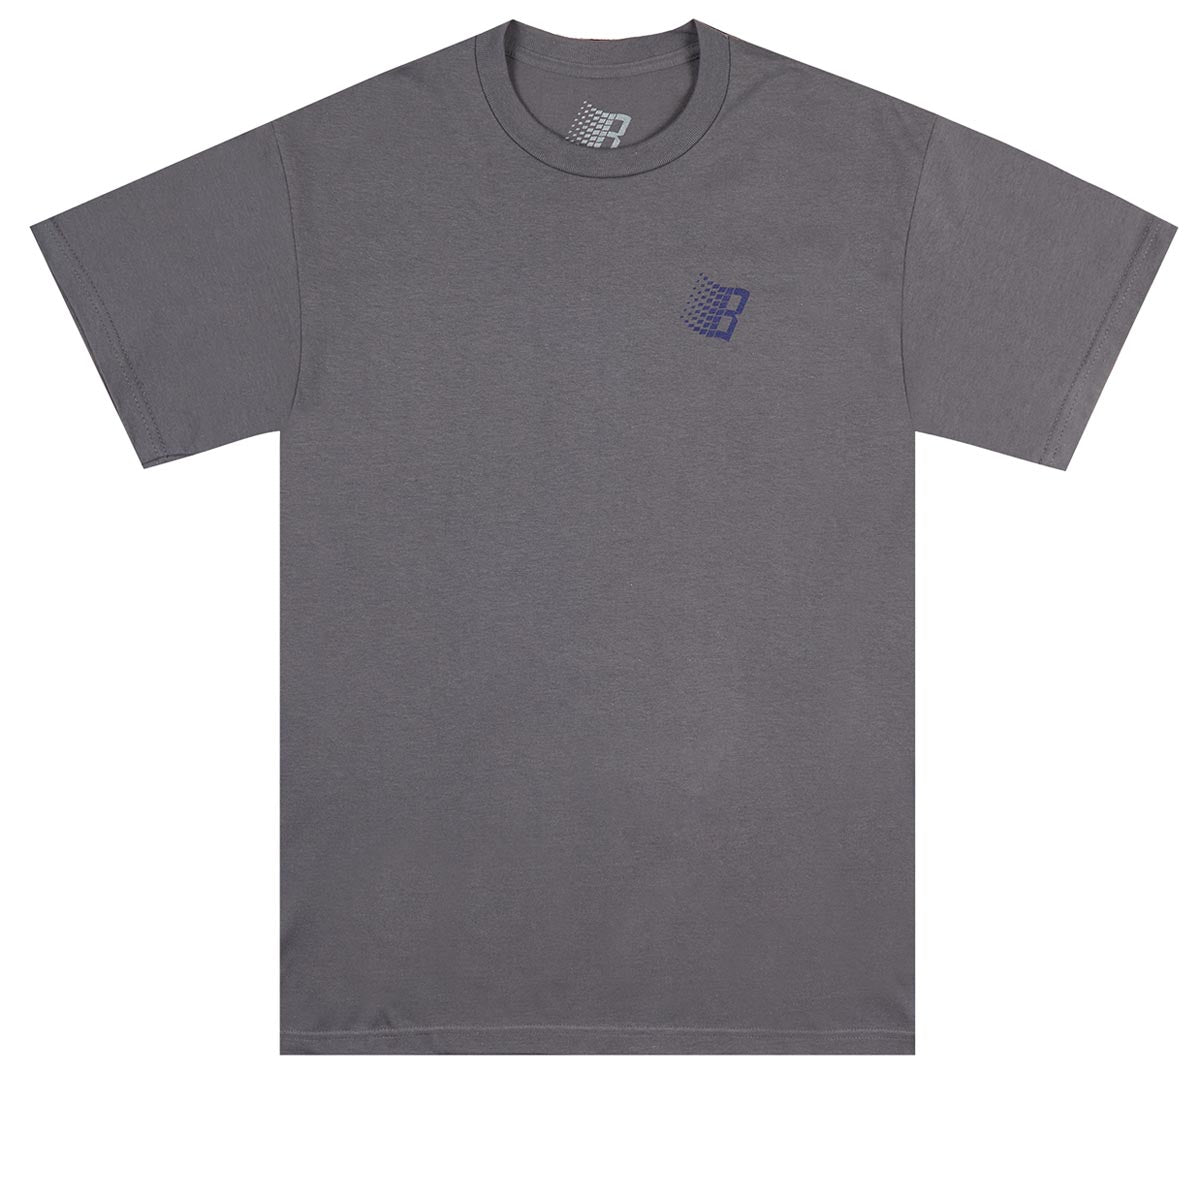 Bronze 56k B Logo T-Shirt - Charcoal image 2